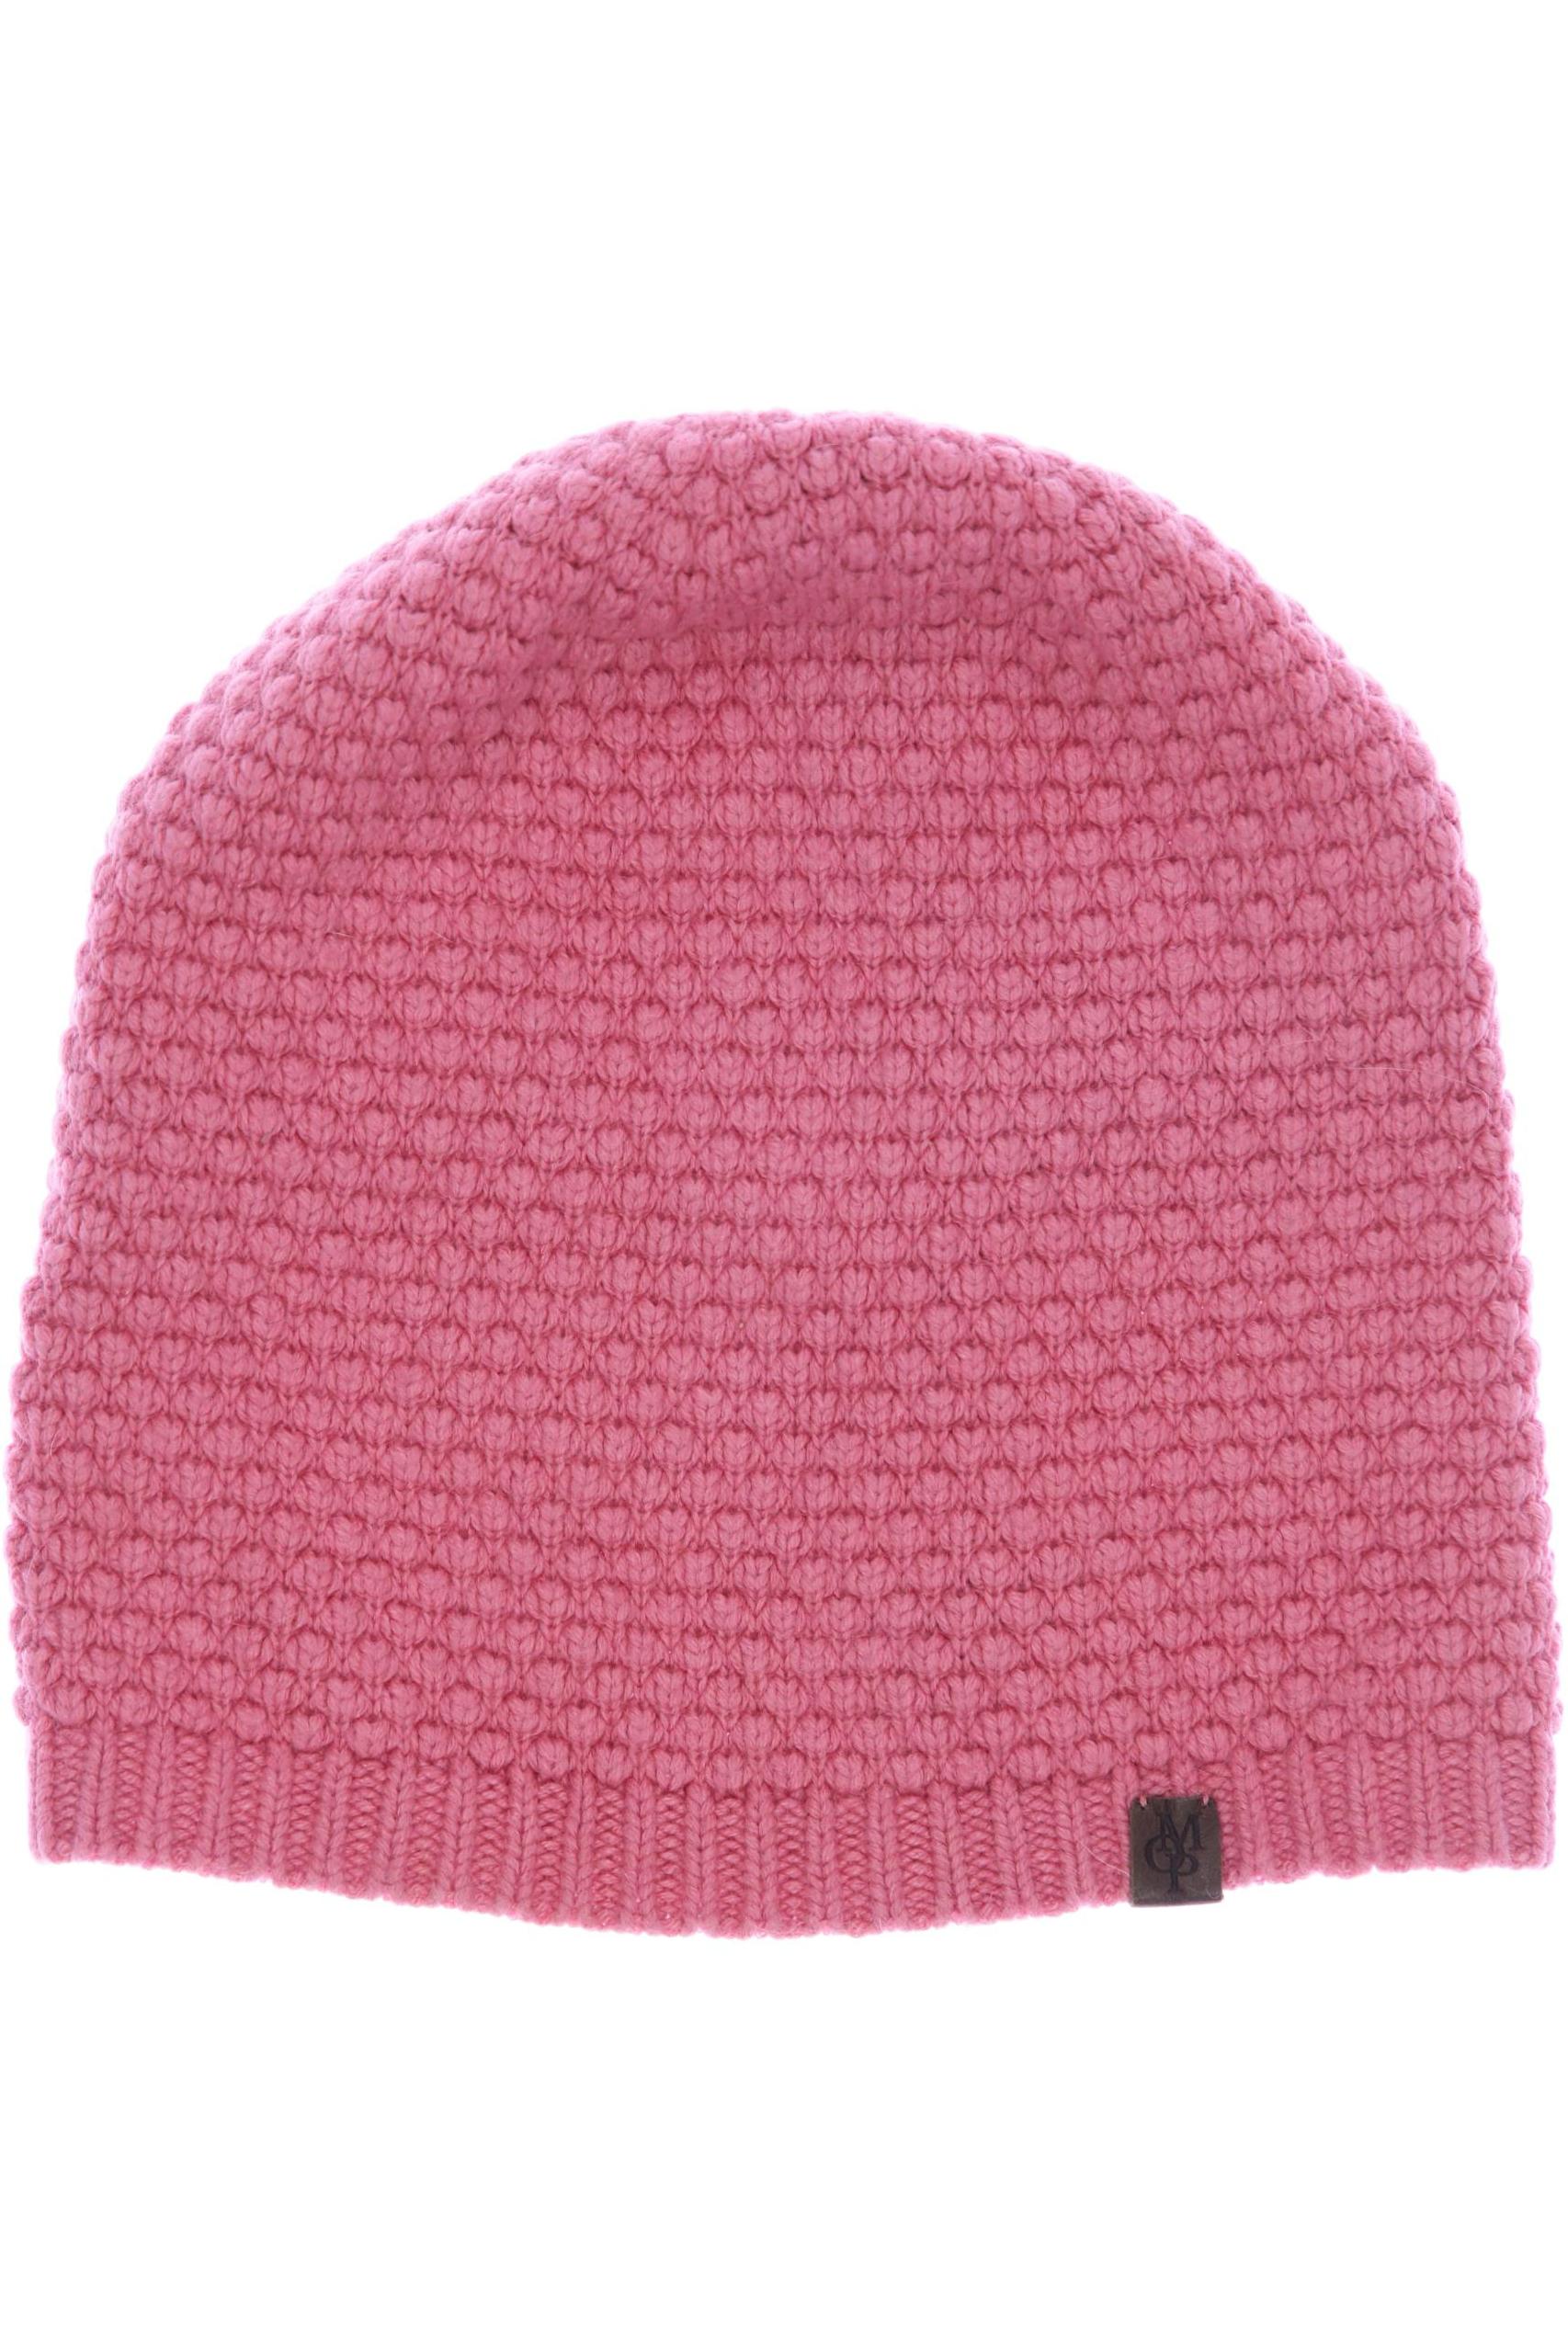 Marc O Polo Damen Hut/Mütze, pink von Marc O Polo